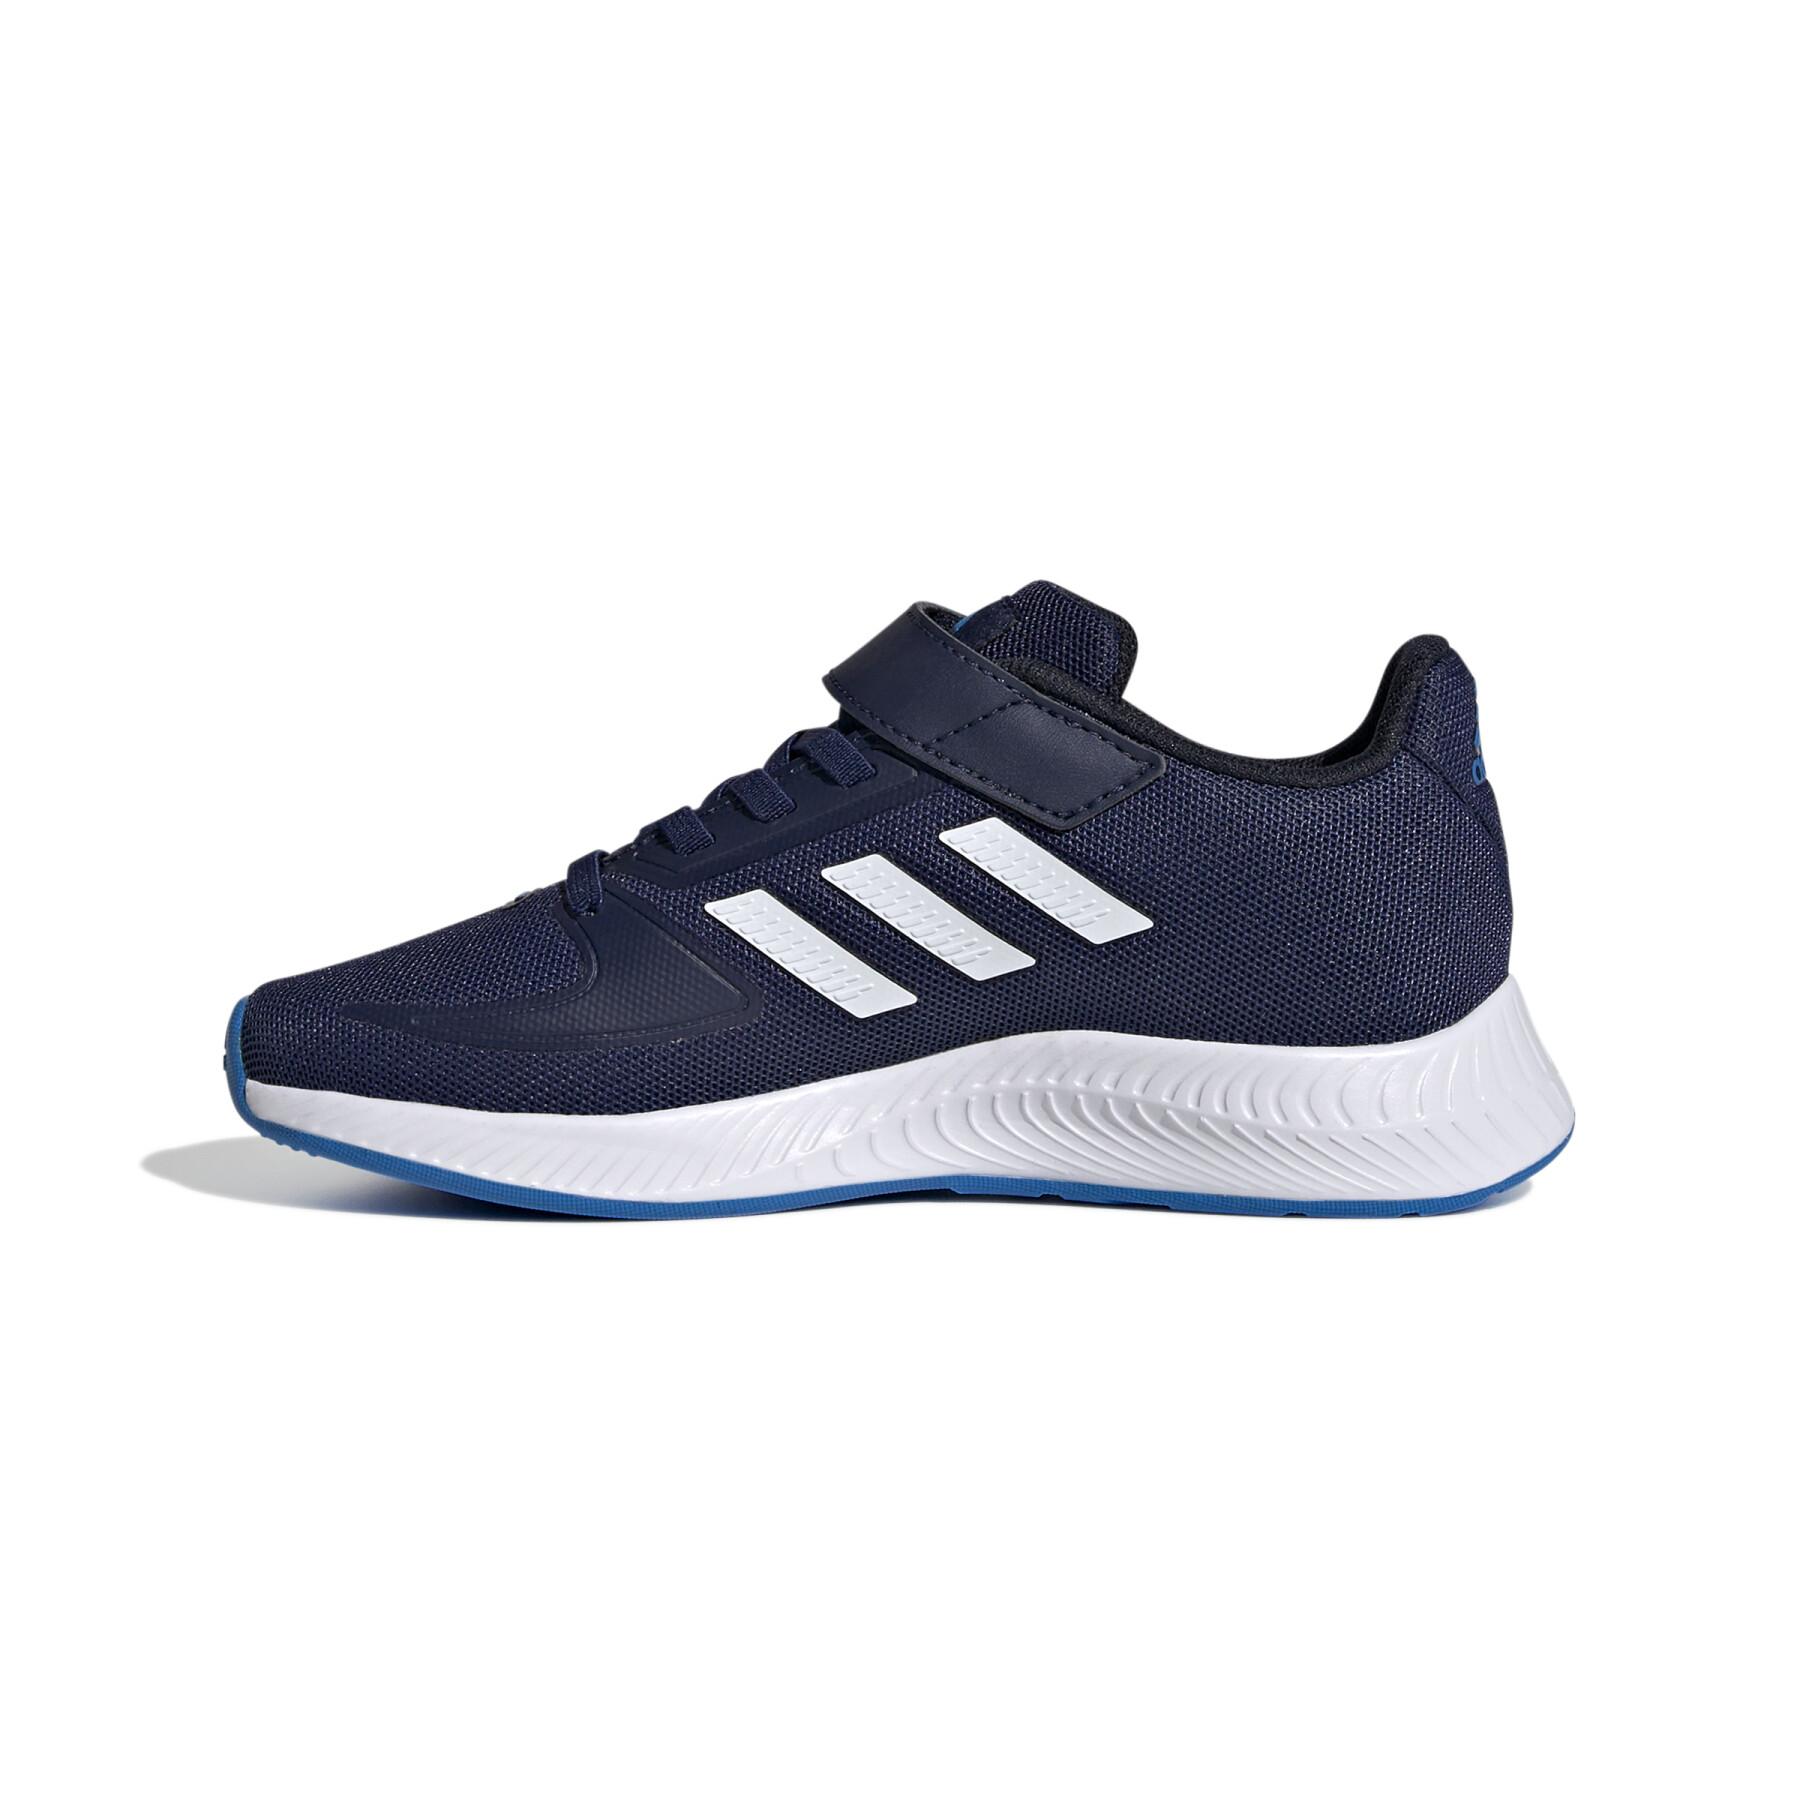 Chaussures de running enfant adidas runfalcon 2.0